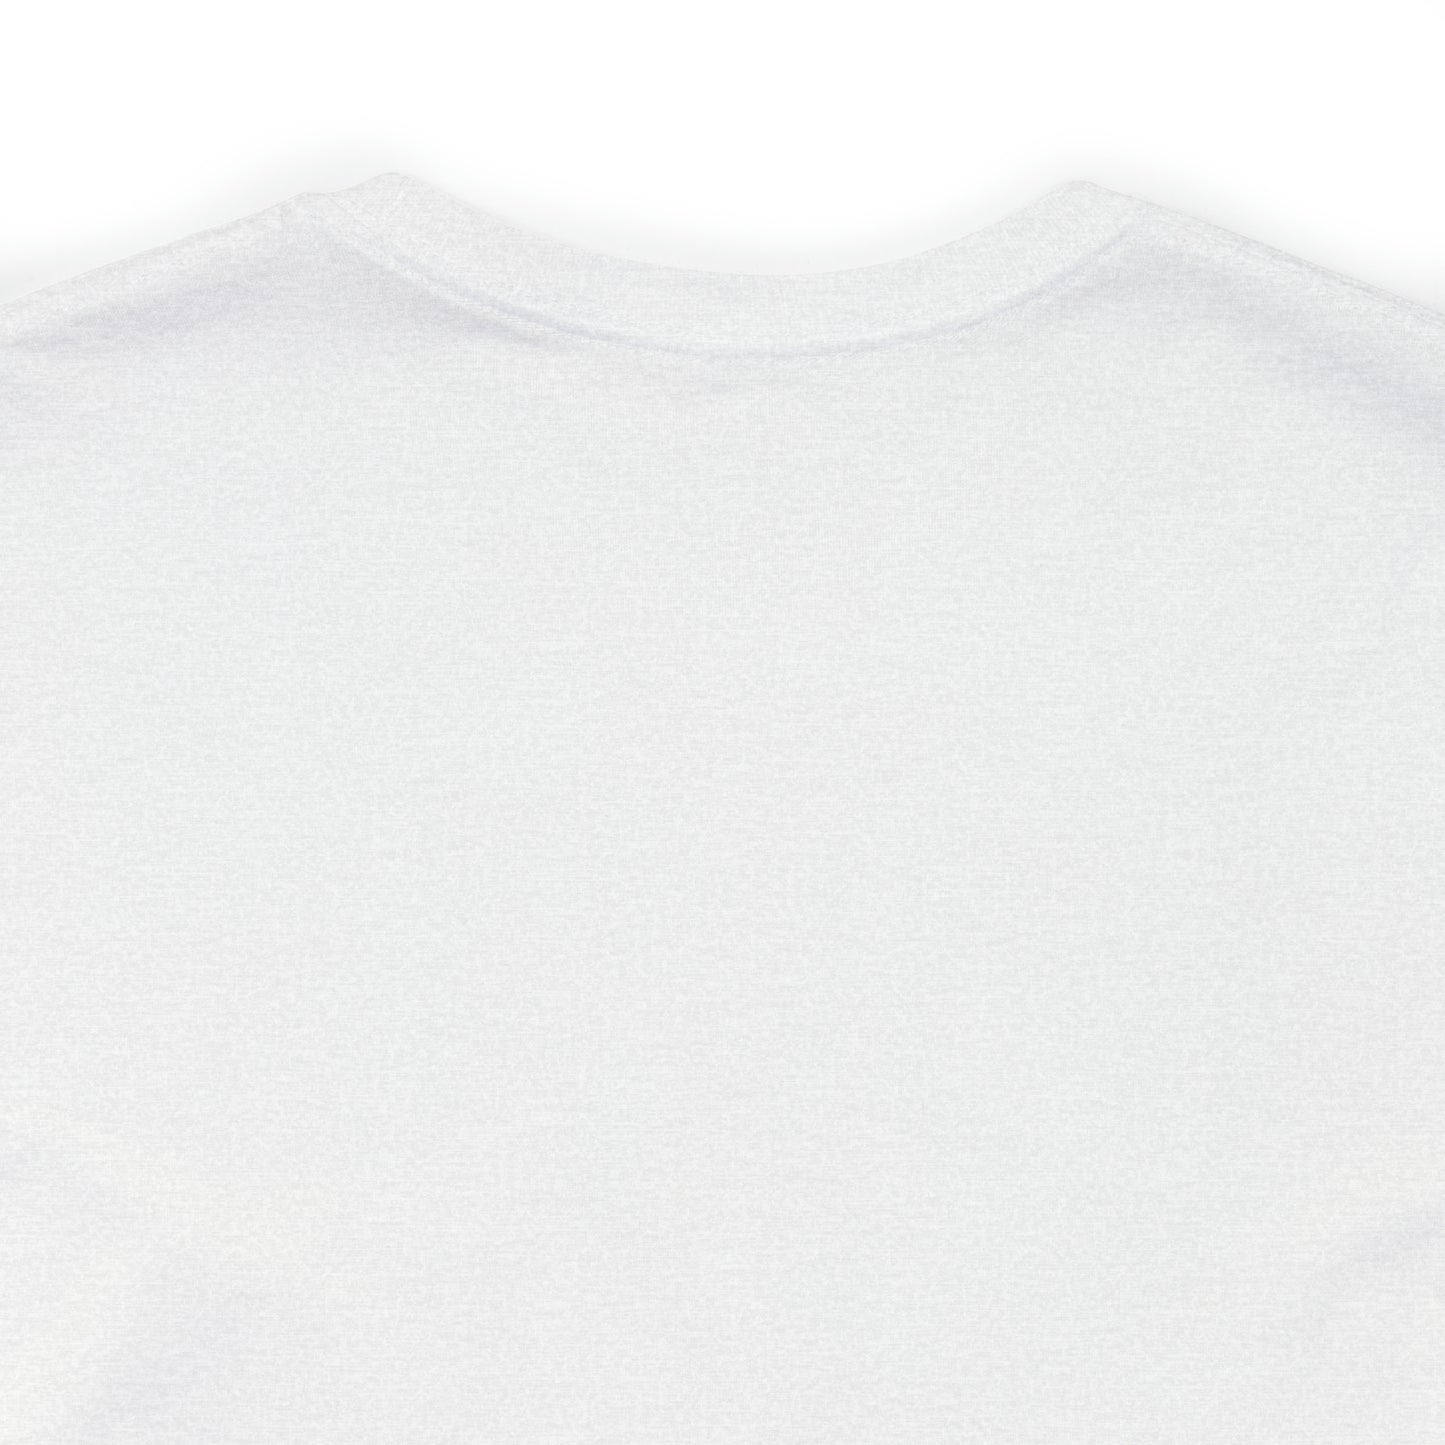 Acushnet, Mass Pickleball Short Sleeve T-Shirt